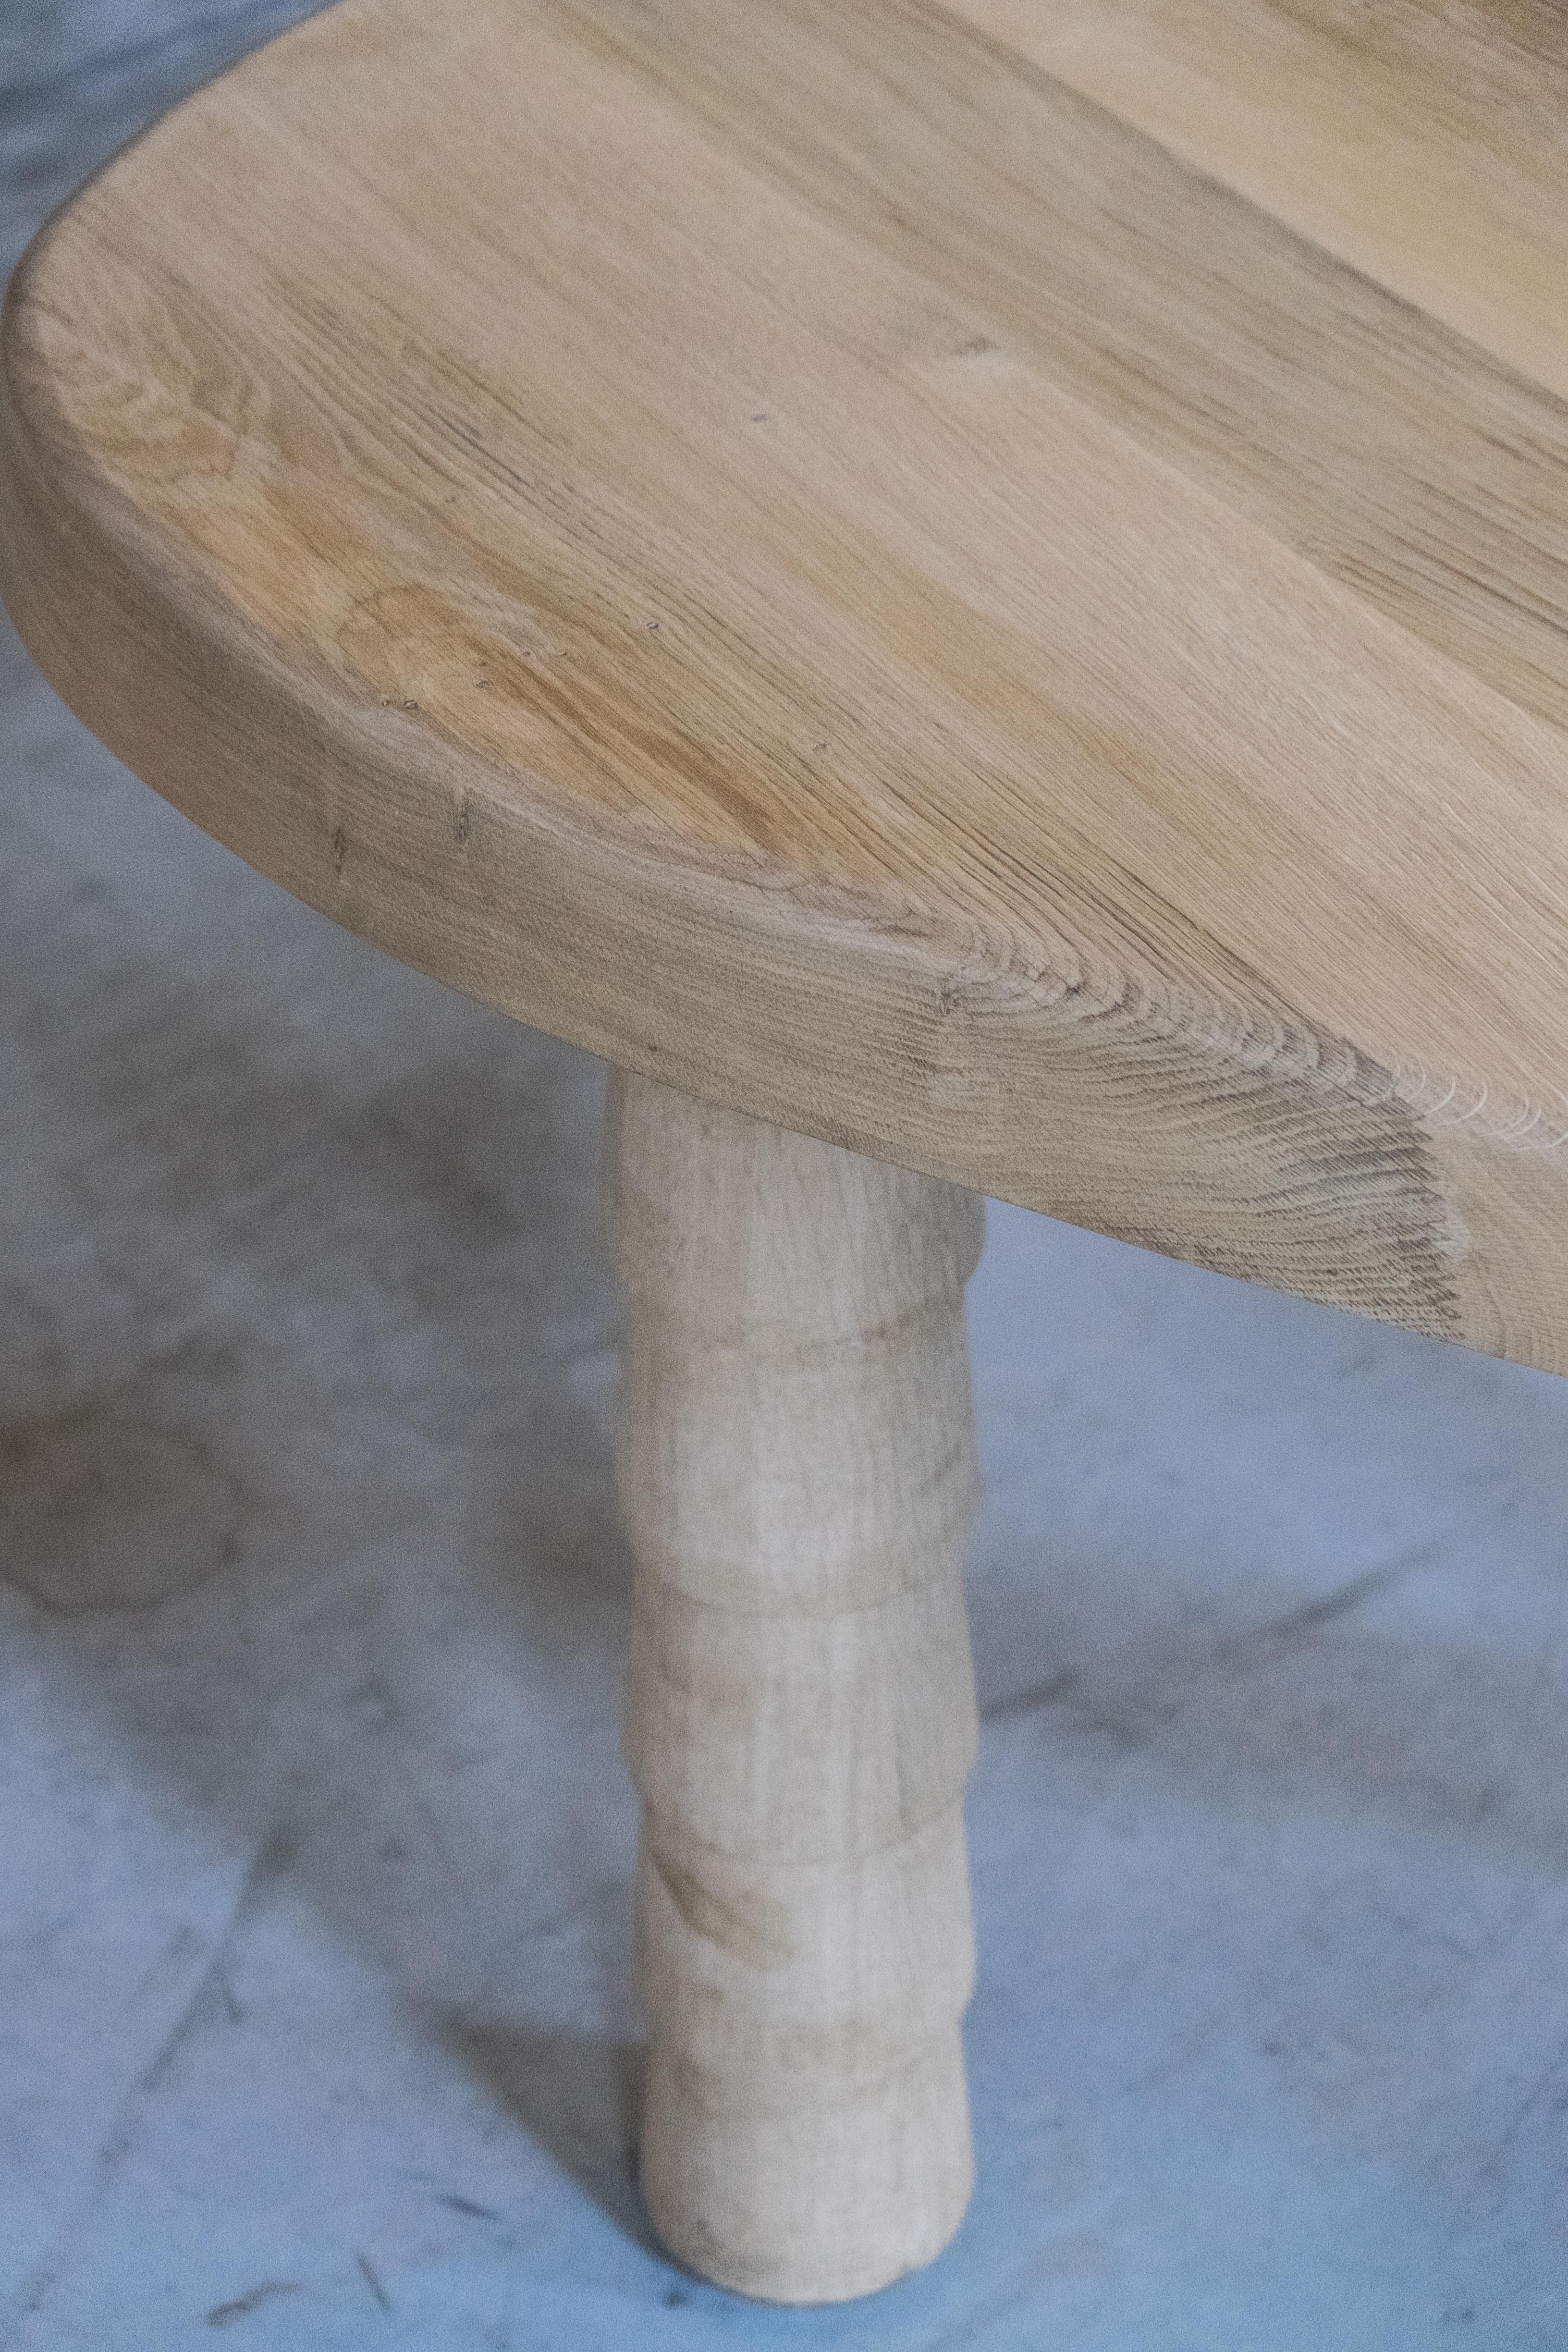 Data table oak S by Atelier Thomas Serruys
Dimensions: D180 x W94 x H 75cm 3 legs
Materials: Oak

Available in 4 sizes:
XS- L 156cm W 82cm/52cm H 75cm – 3 legs 
S - L 180cm W 94cm/63cm H 75cm – 3 legs 
M - L 210cm W 110cm/73cm H 75cm – 3 legs